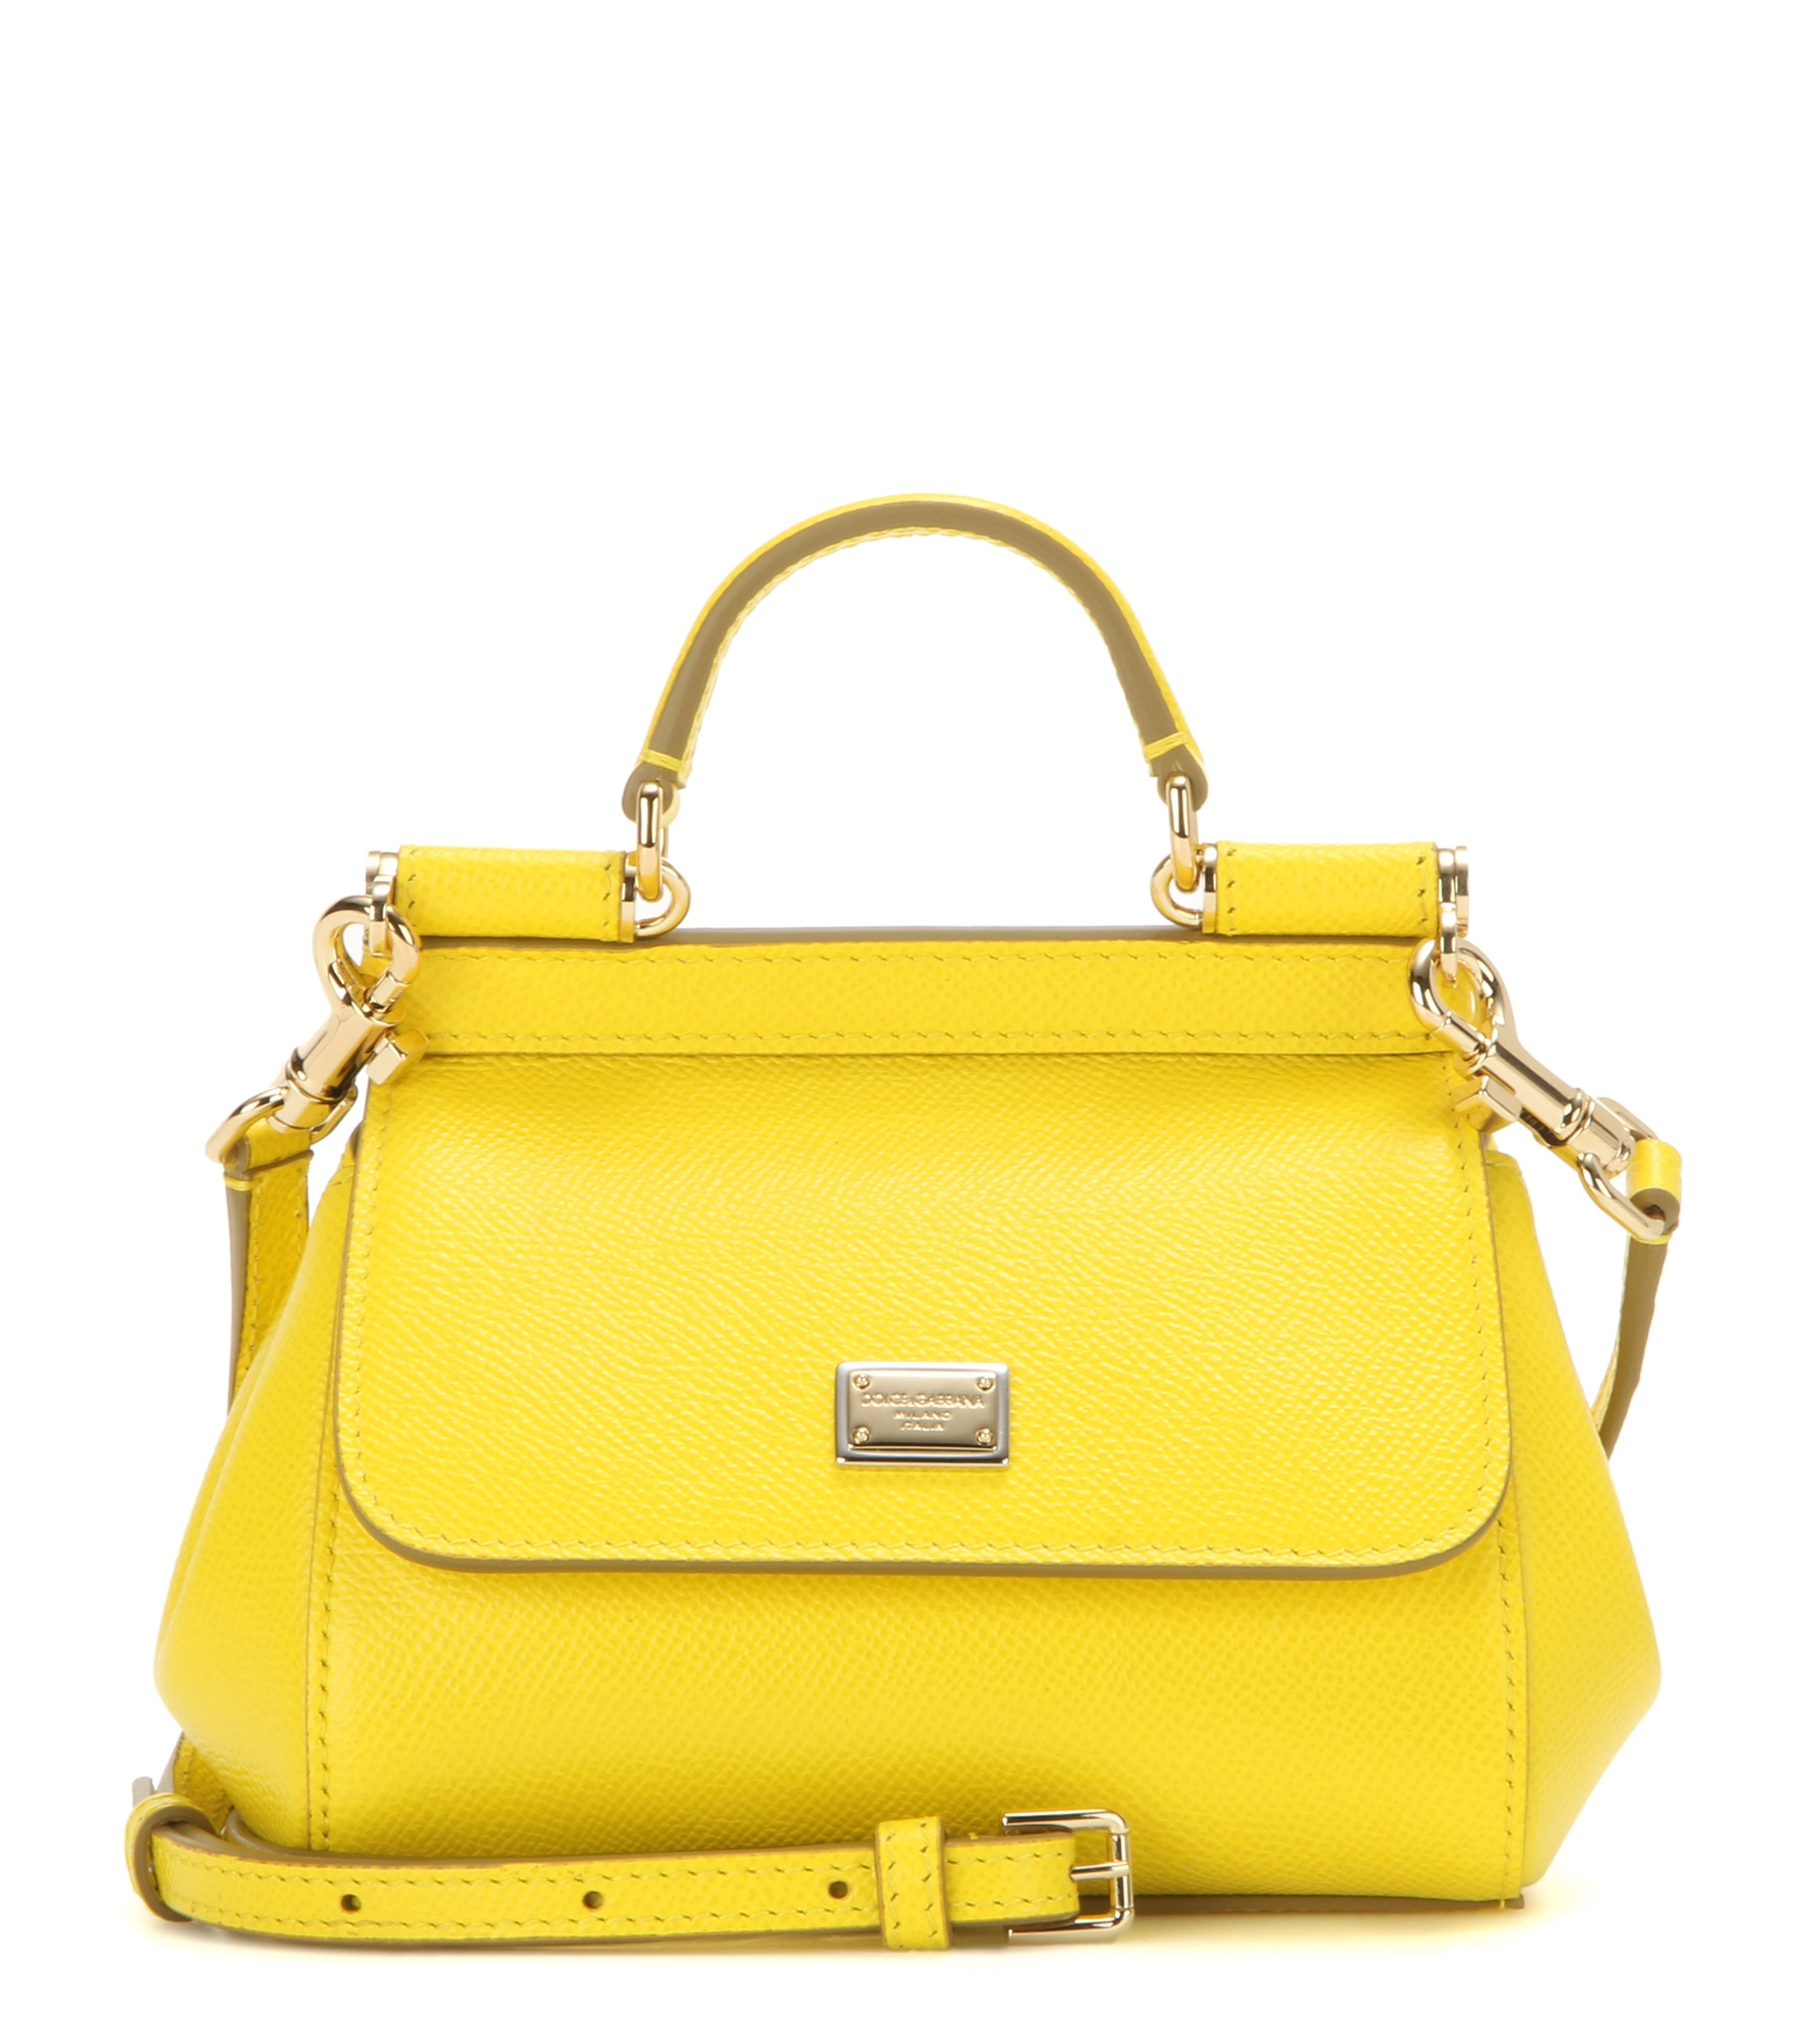 Dolce & Gabbana Sicily Medium Leather Shoulder Bag in Yellow - Lyst